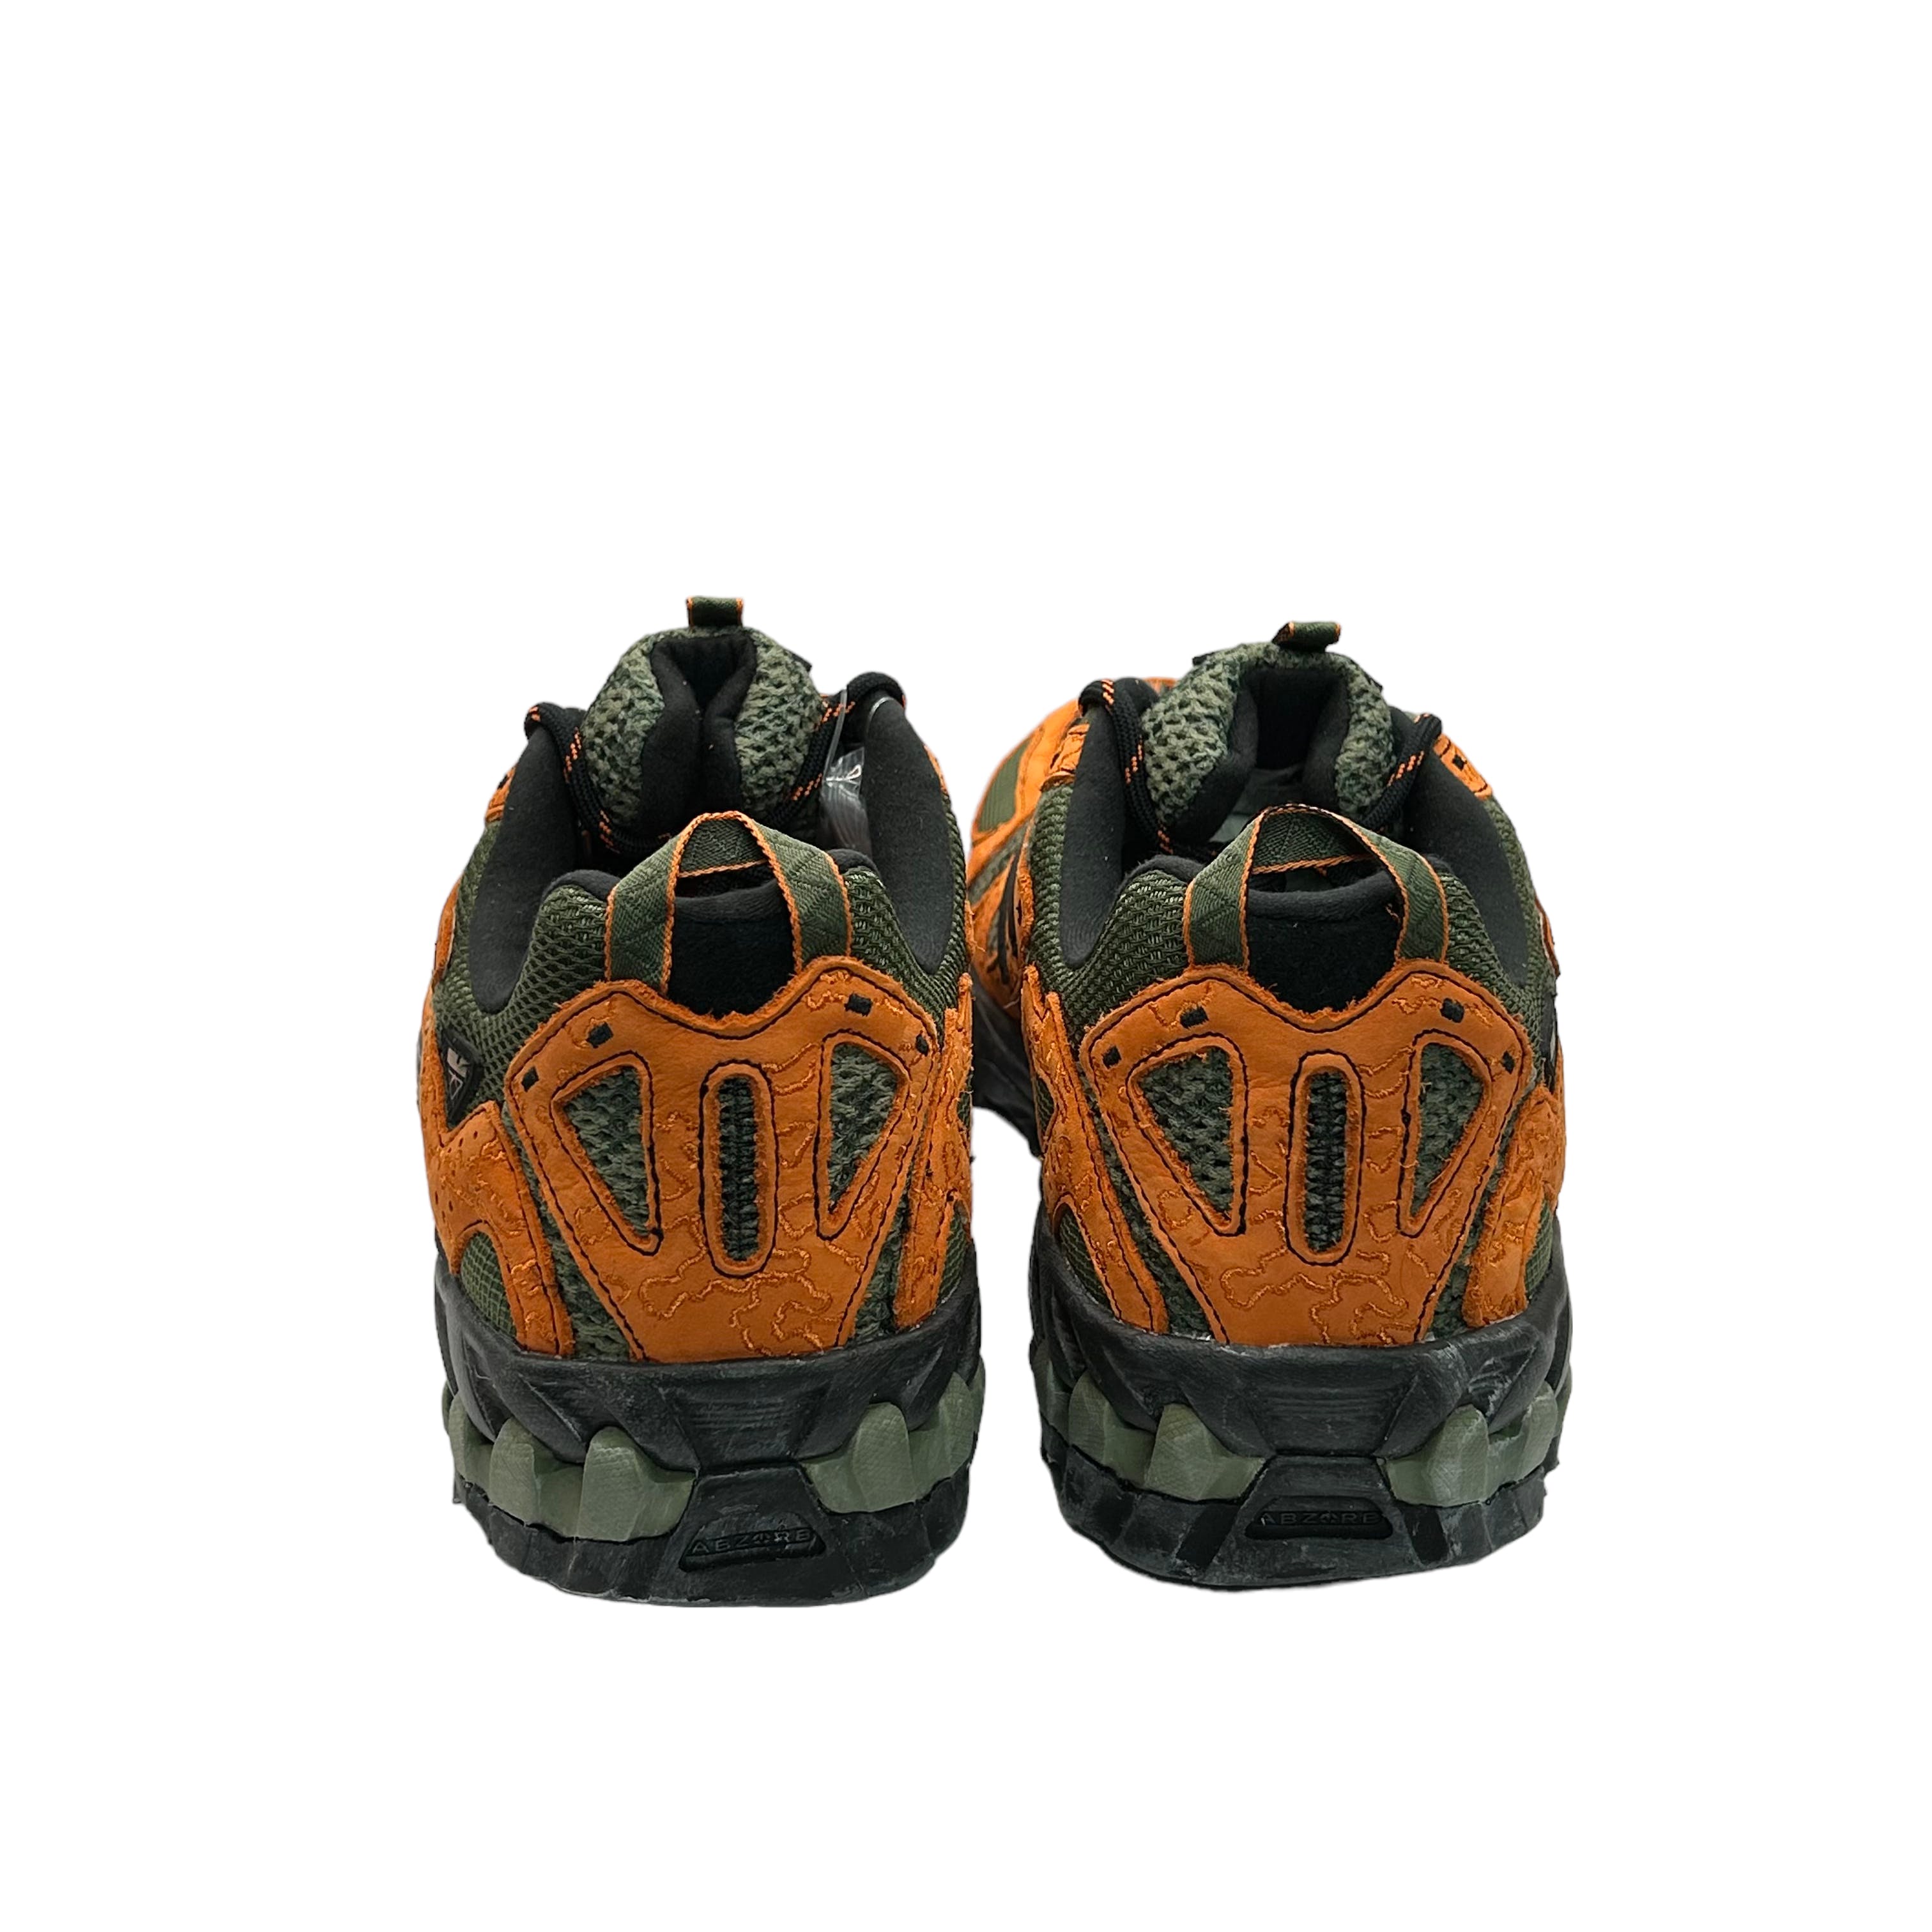 JFG x NB 610 “Lil Swamps” Hiking Shoe - 5